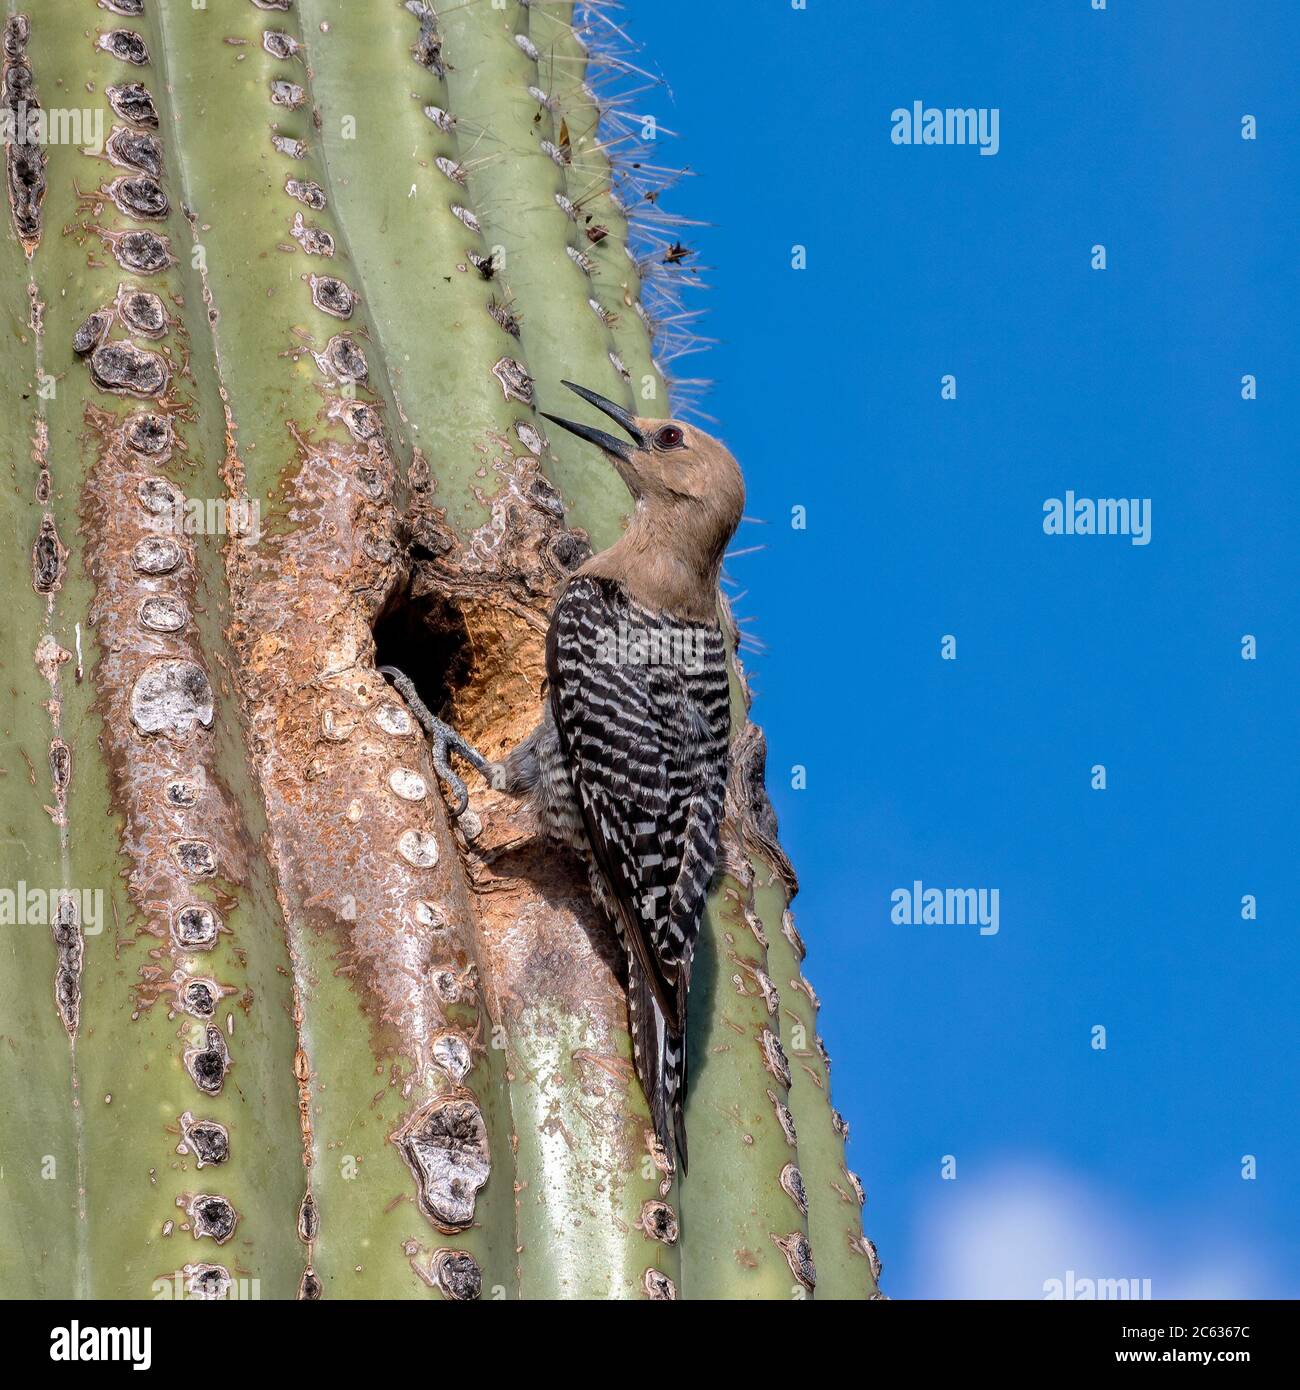 Cactus Wren in front of Nest in Saguaro Cactus in the Arizona Desert Stock Photo